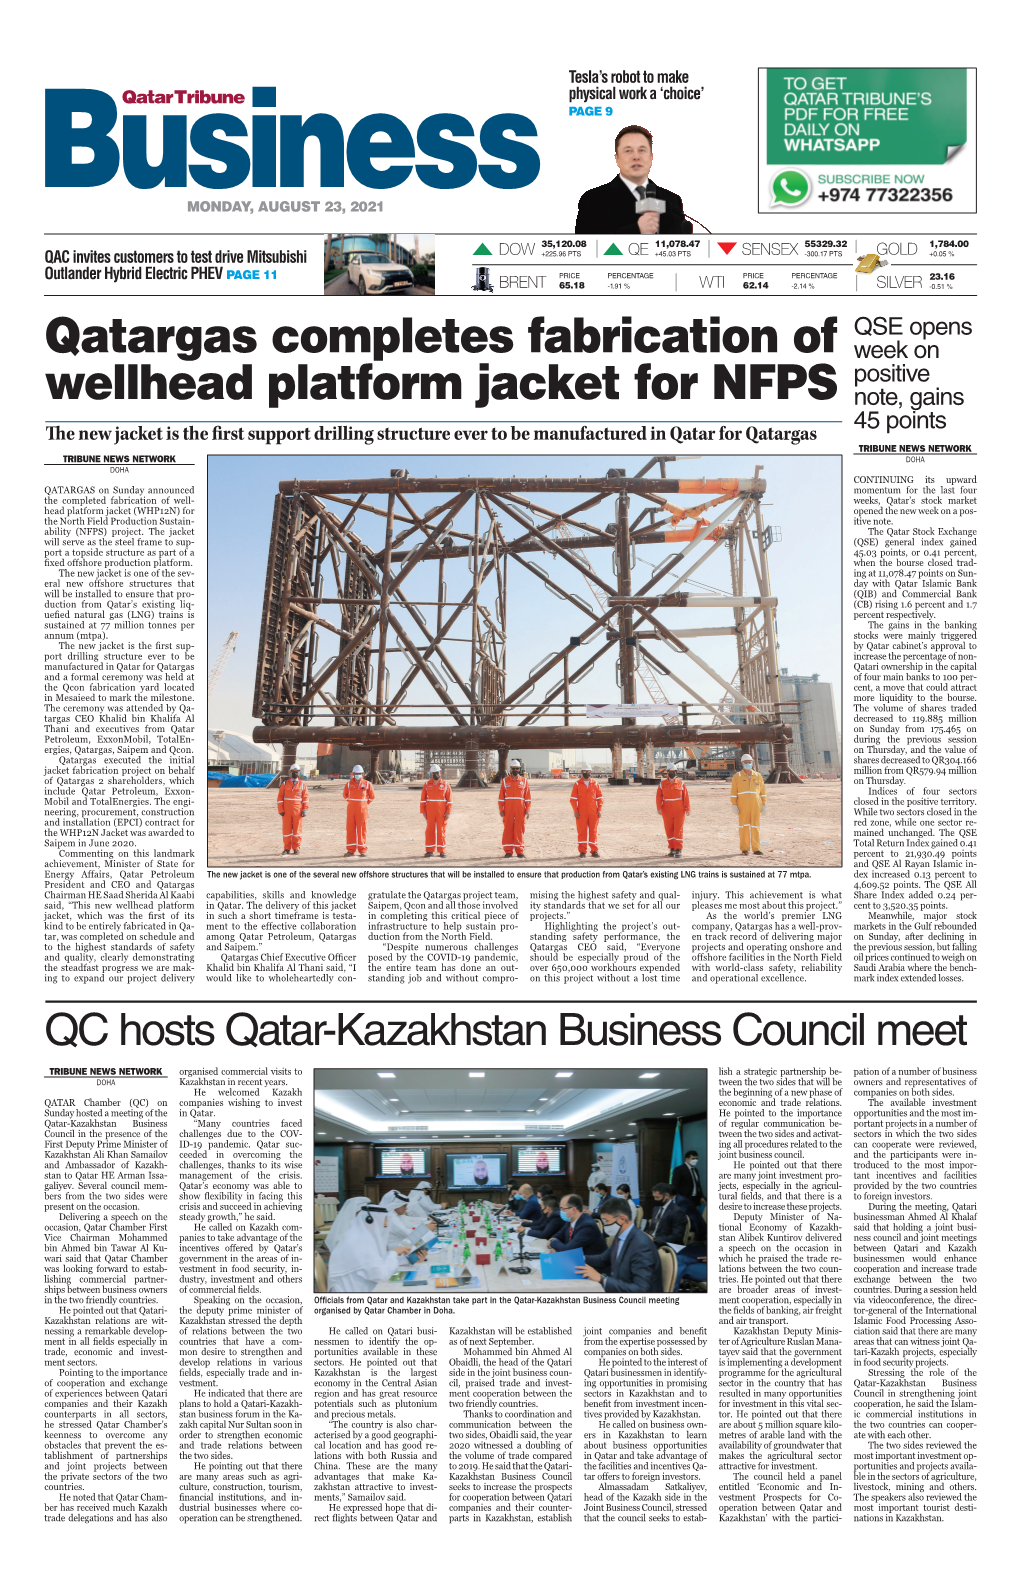 Qatargas Completes Fabrication of Wellhead Platform Jacket for NFPS